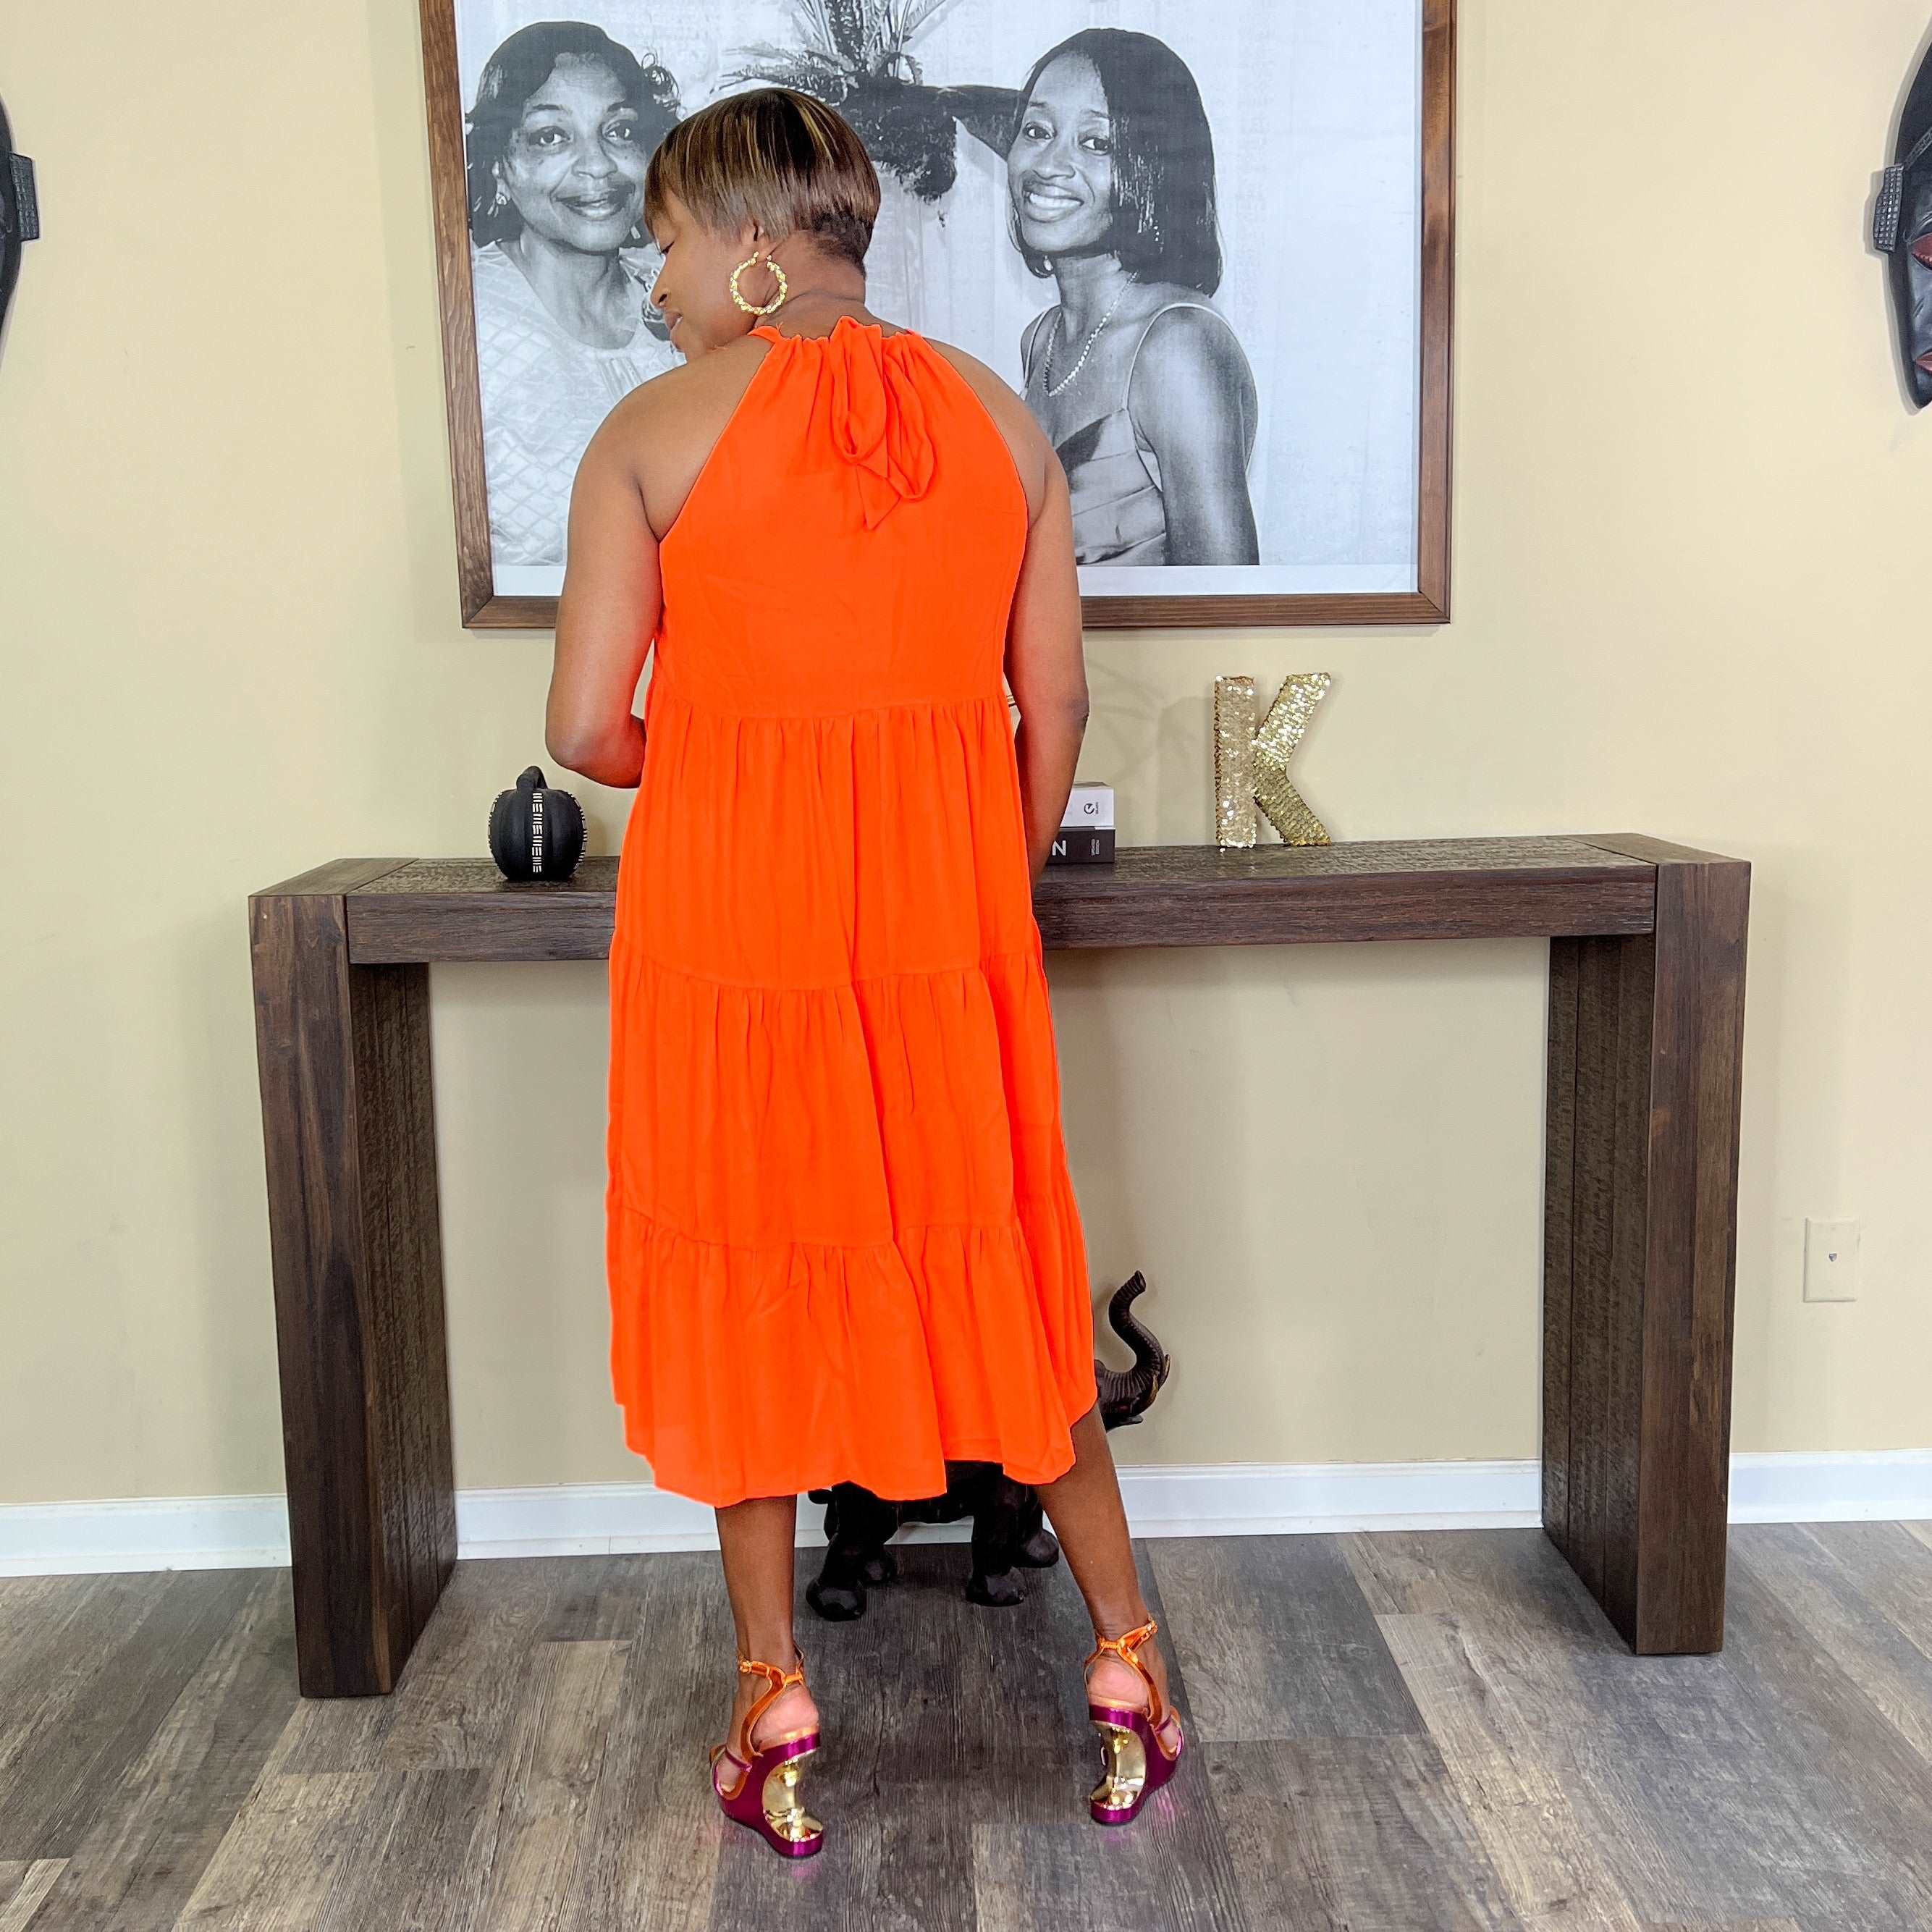 neon orange dress